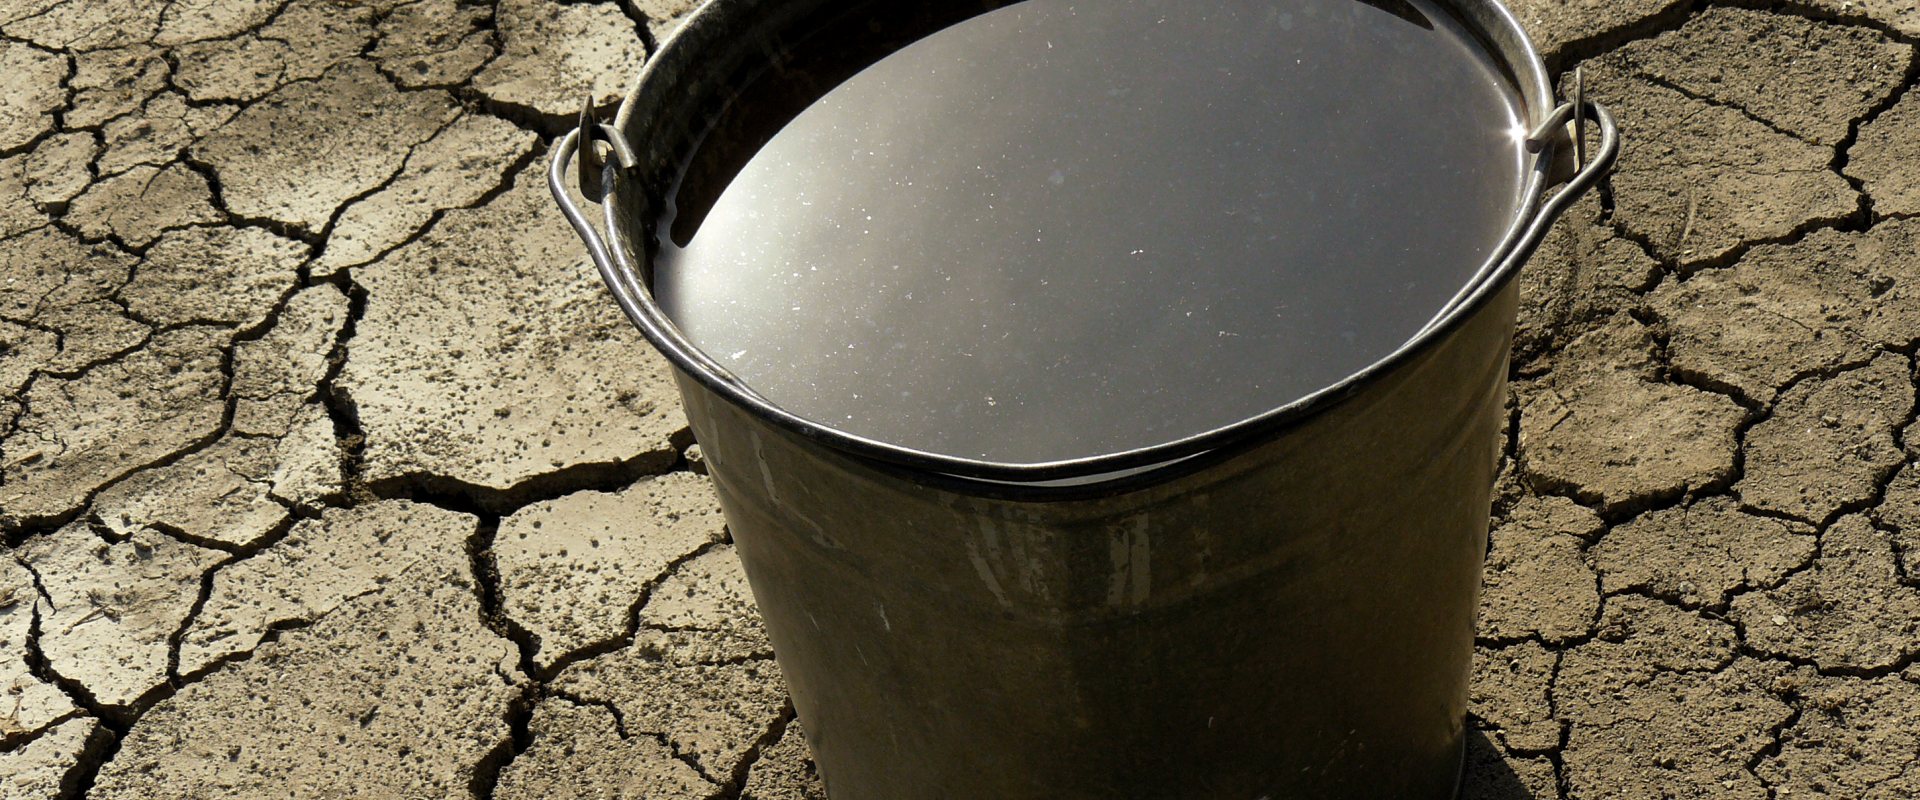 Bucket of water on dry soil - Stockholm World Water Week